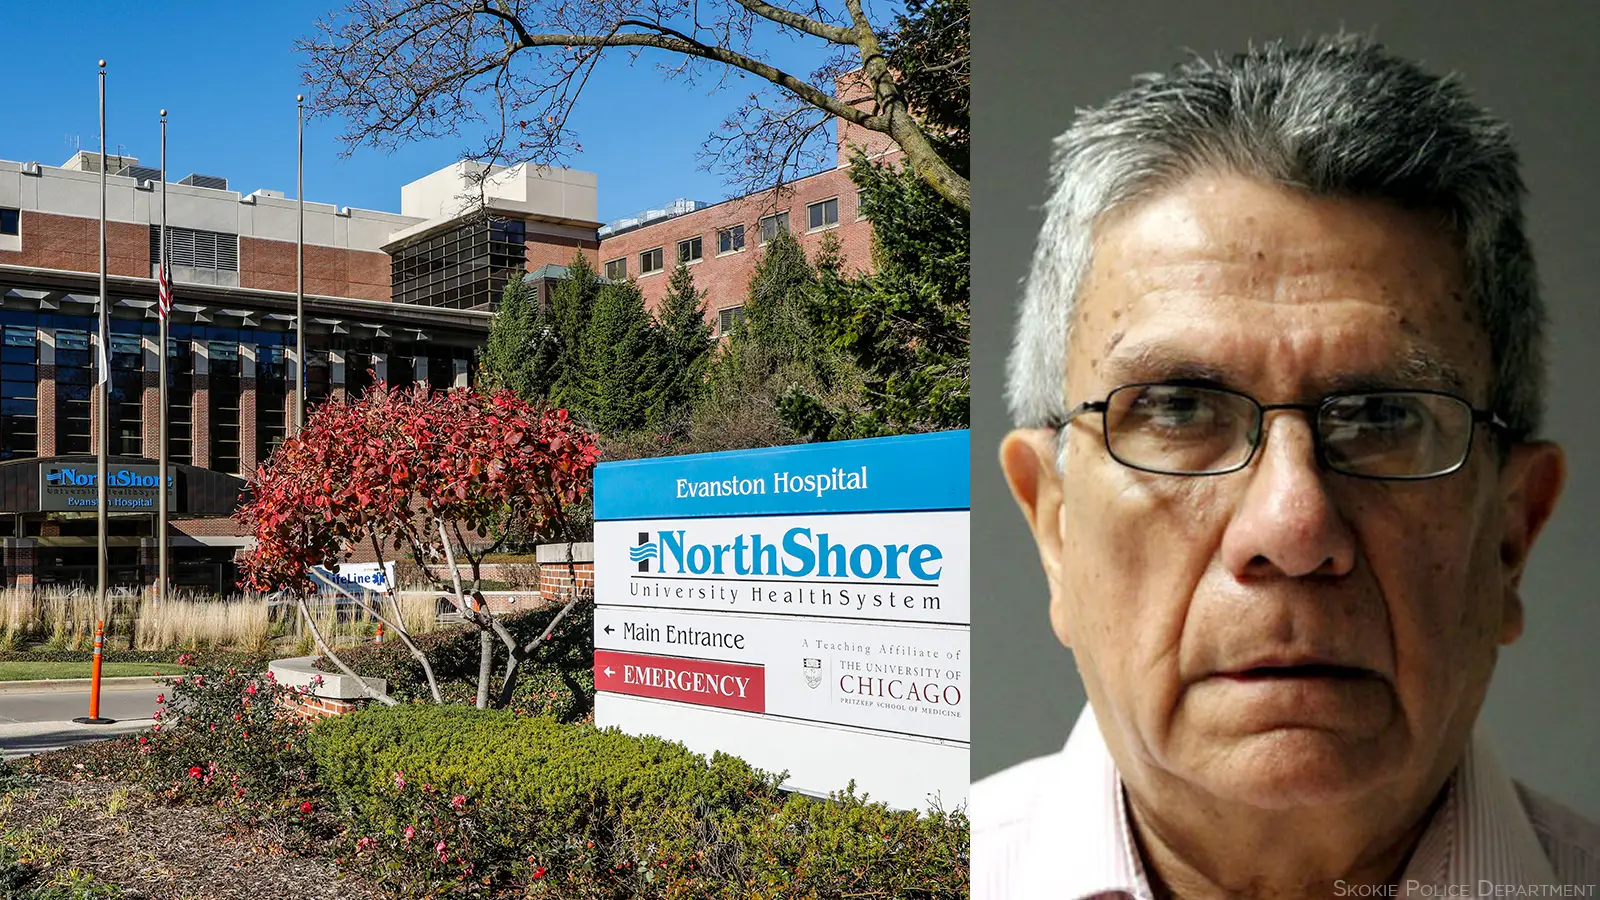 Jane Doe 31 alleges sexual assault by Gynecologist Fabio Ortega, NorthShore University HealthSystem